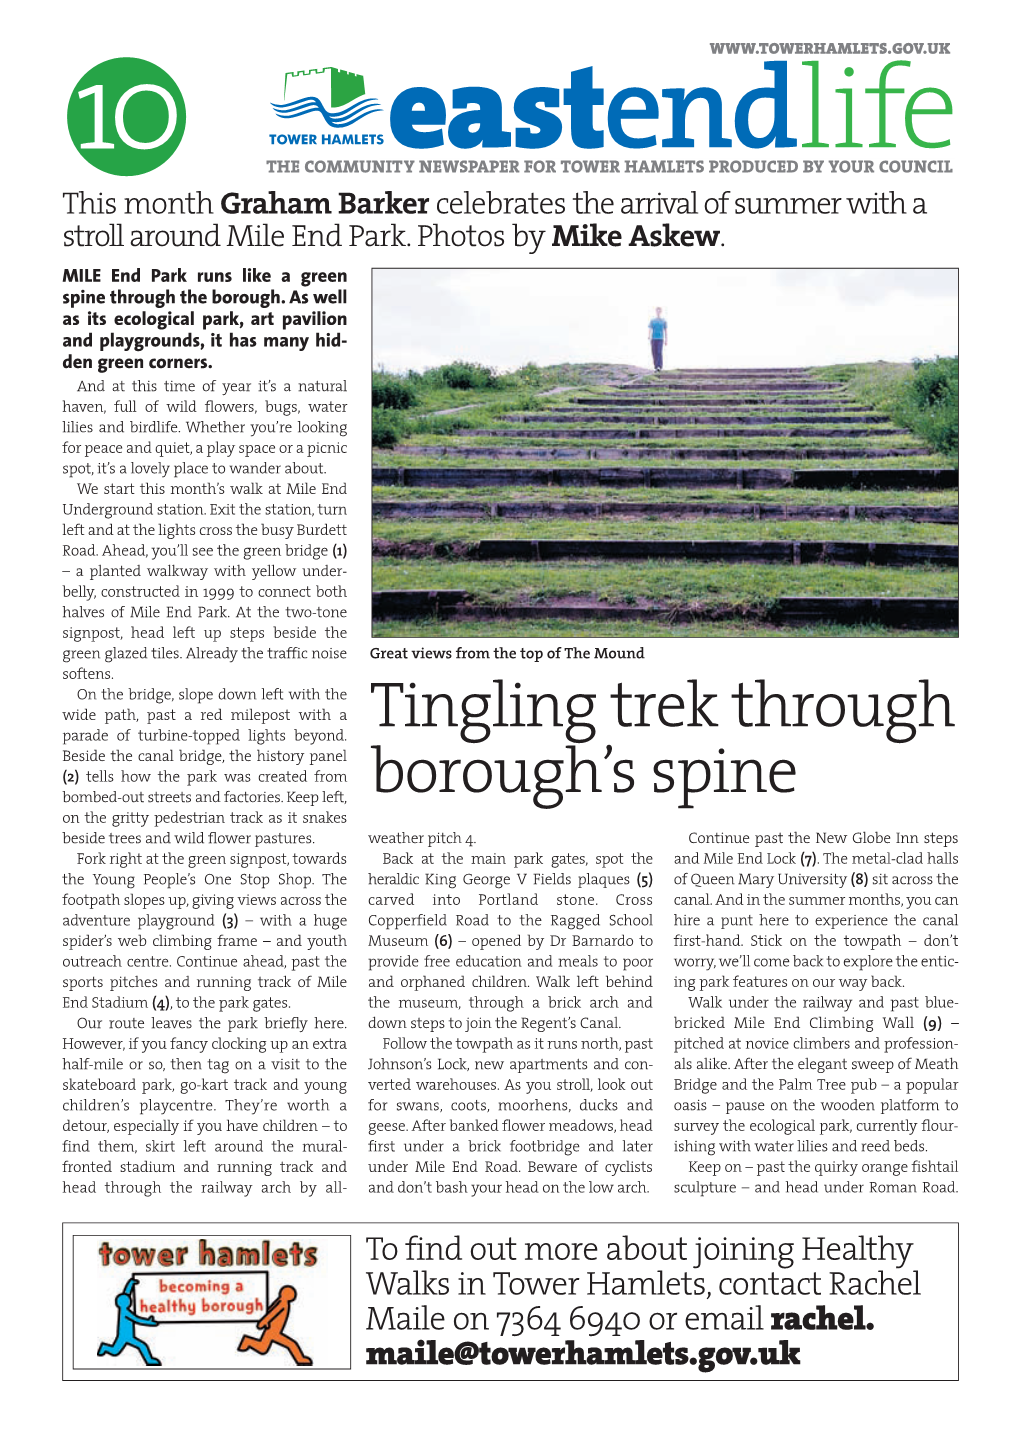 Tingling Trek Through Borough's Spine, Mile End Park Walk